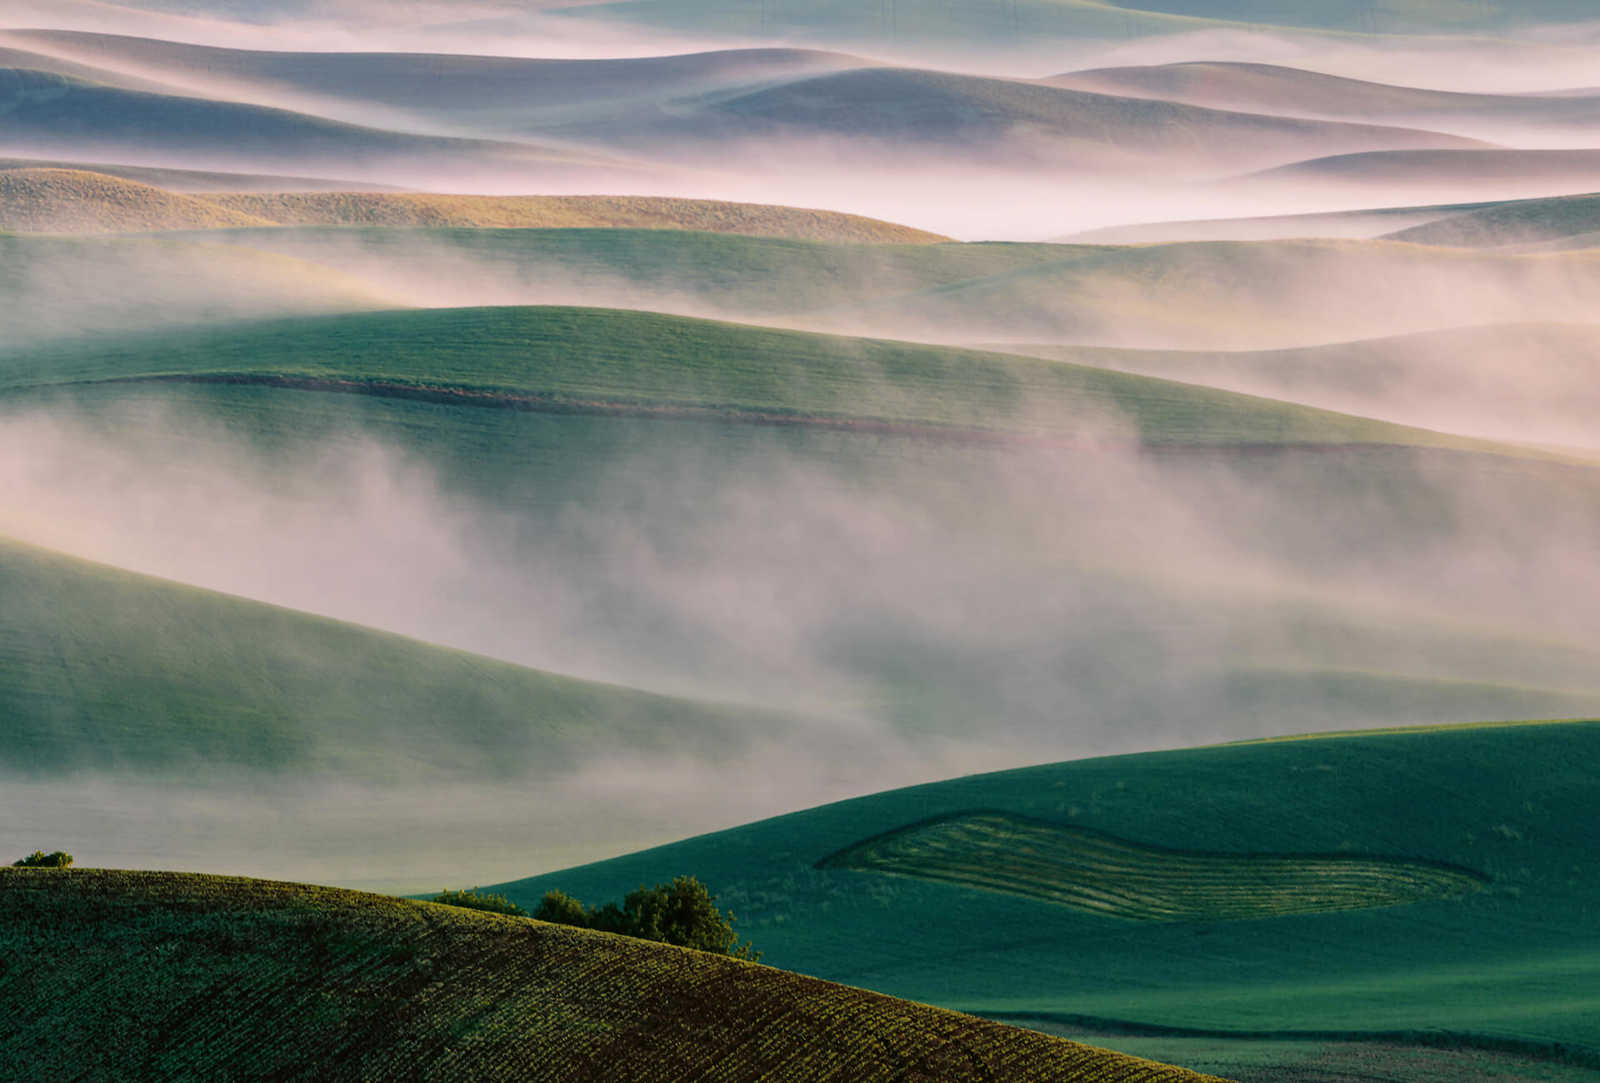 Fototapete Nebel Landschaft – Grün, Weiß, Braun
